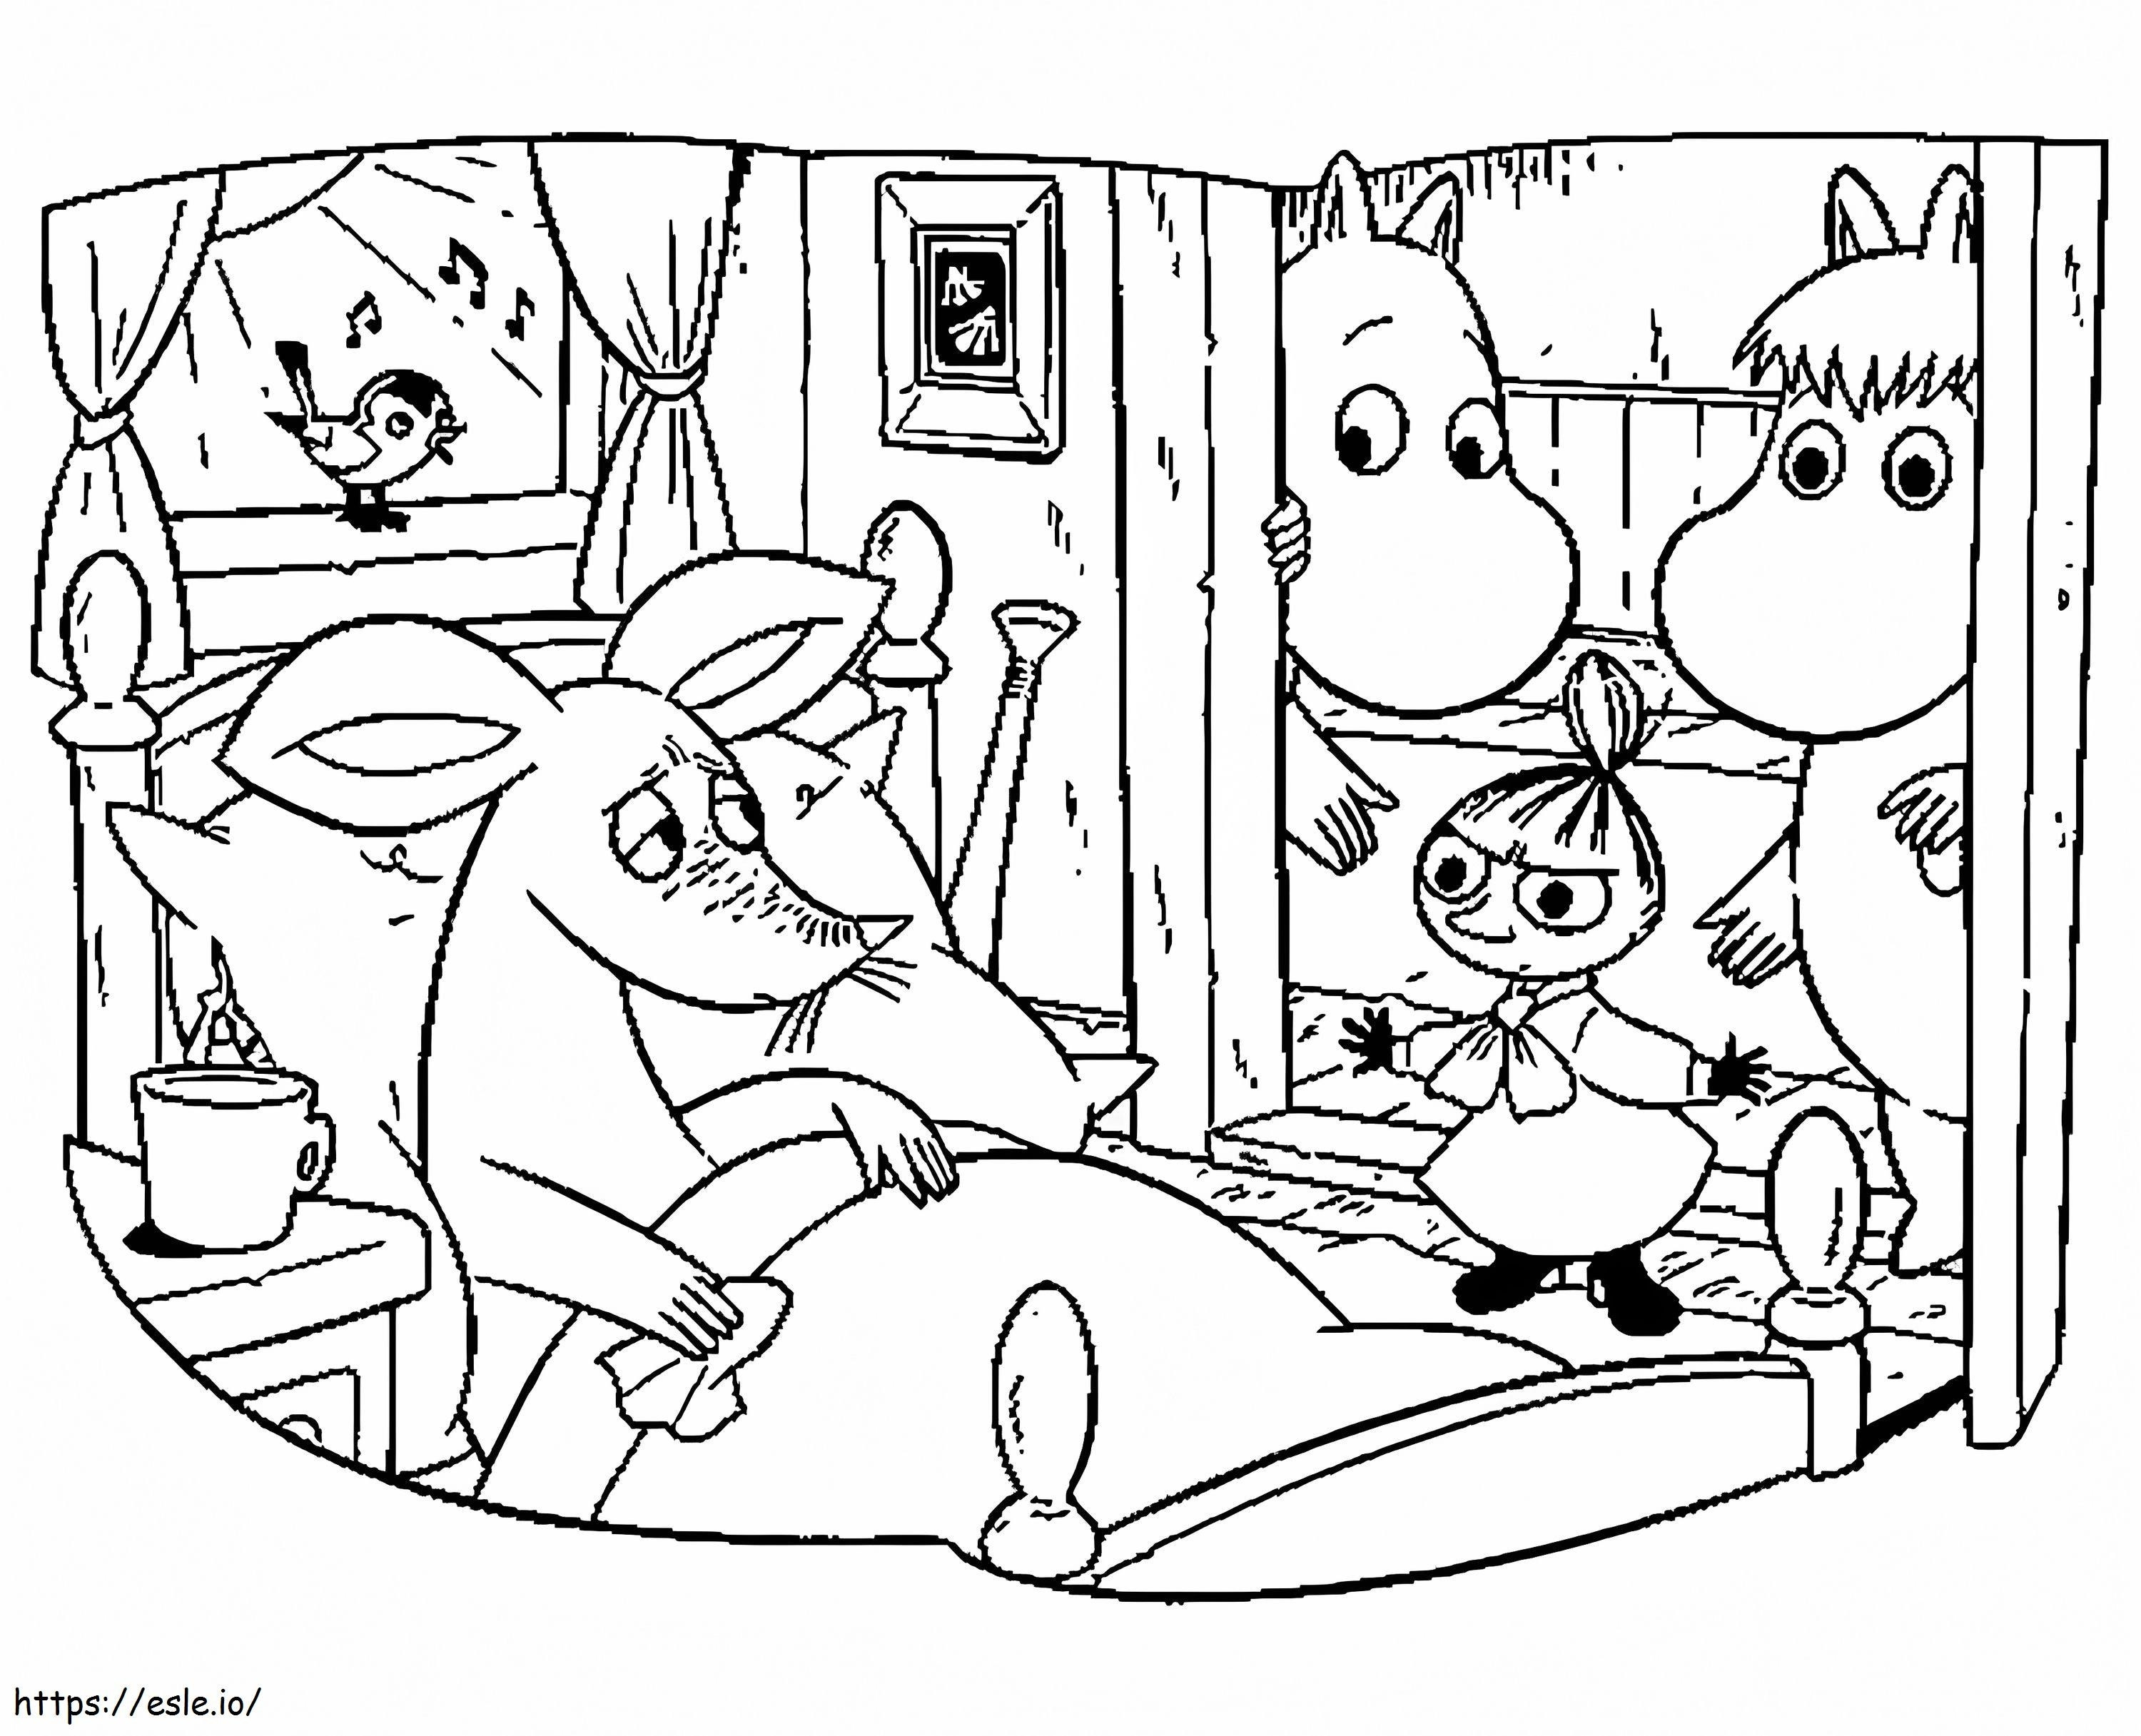 Moomin 3 coloring page